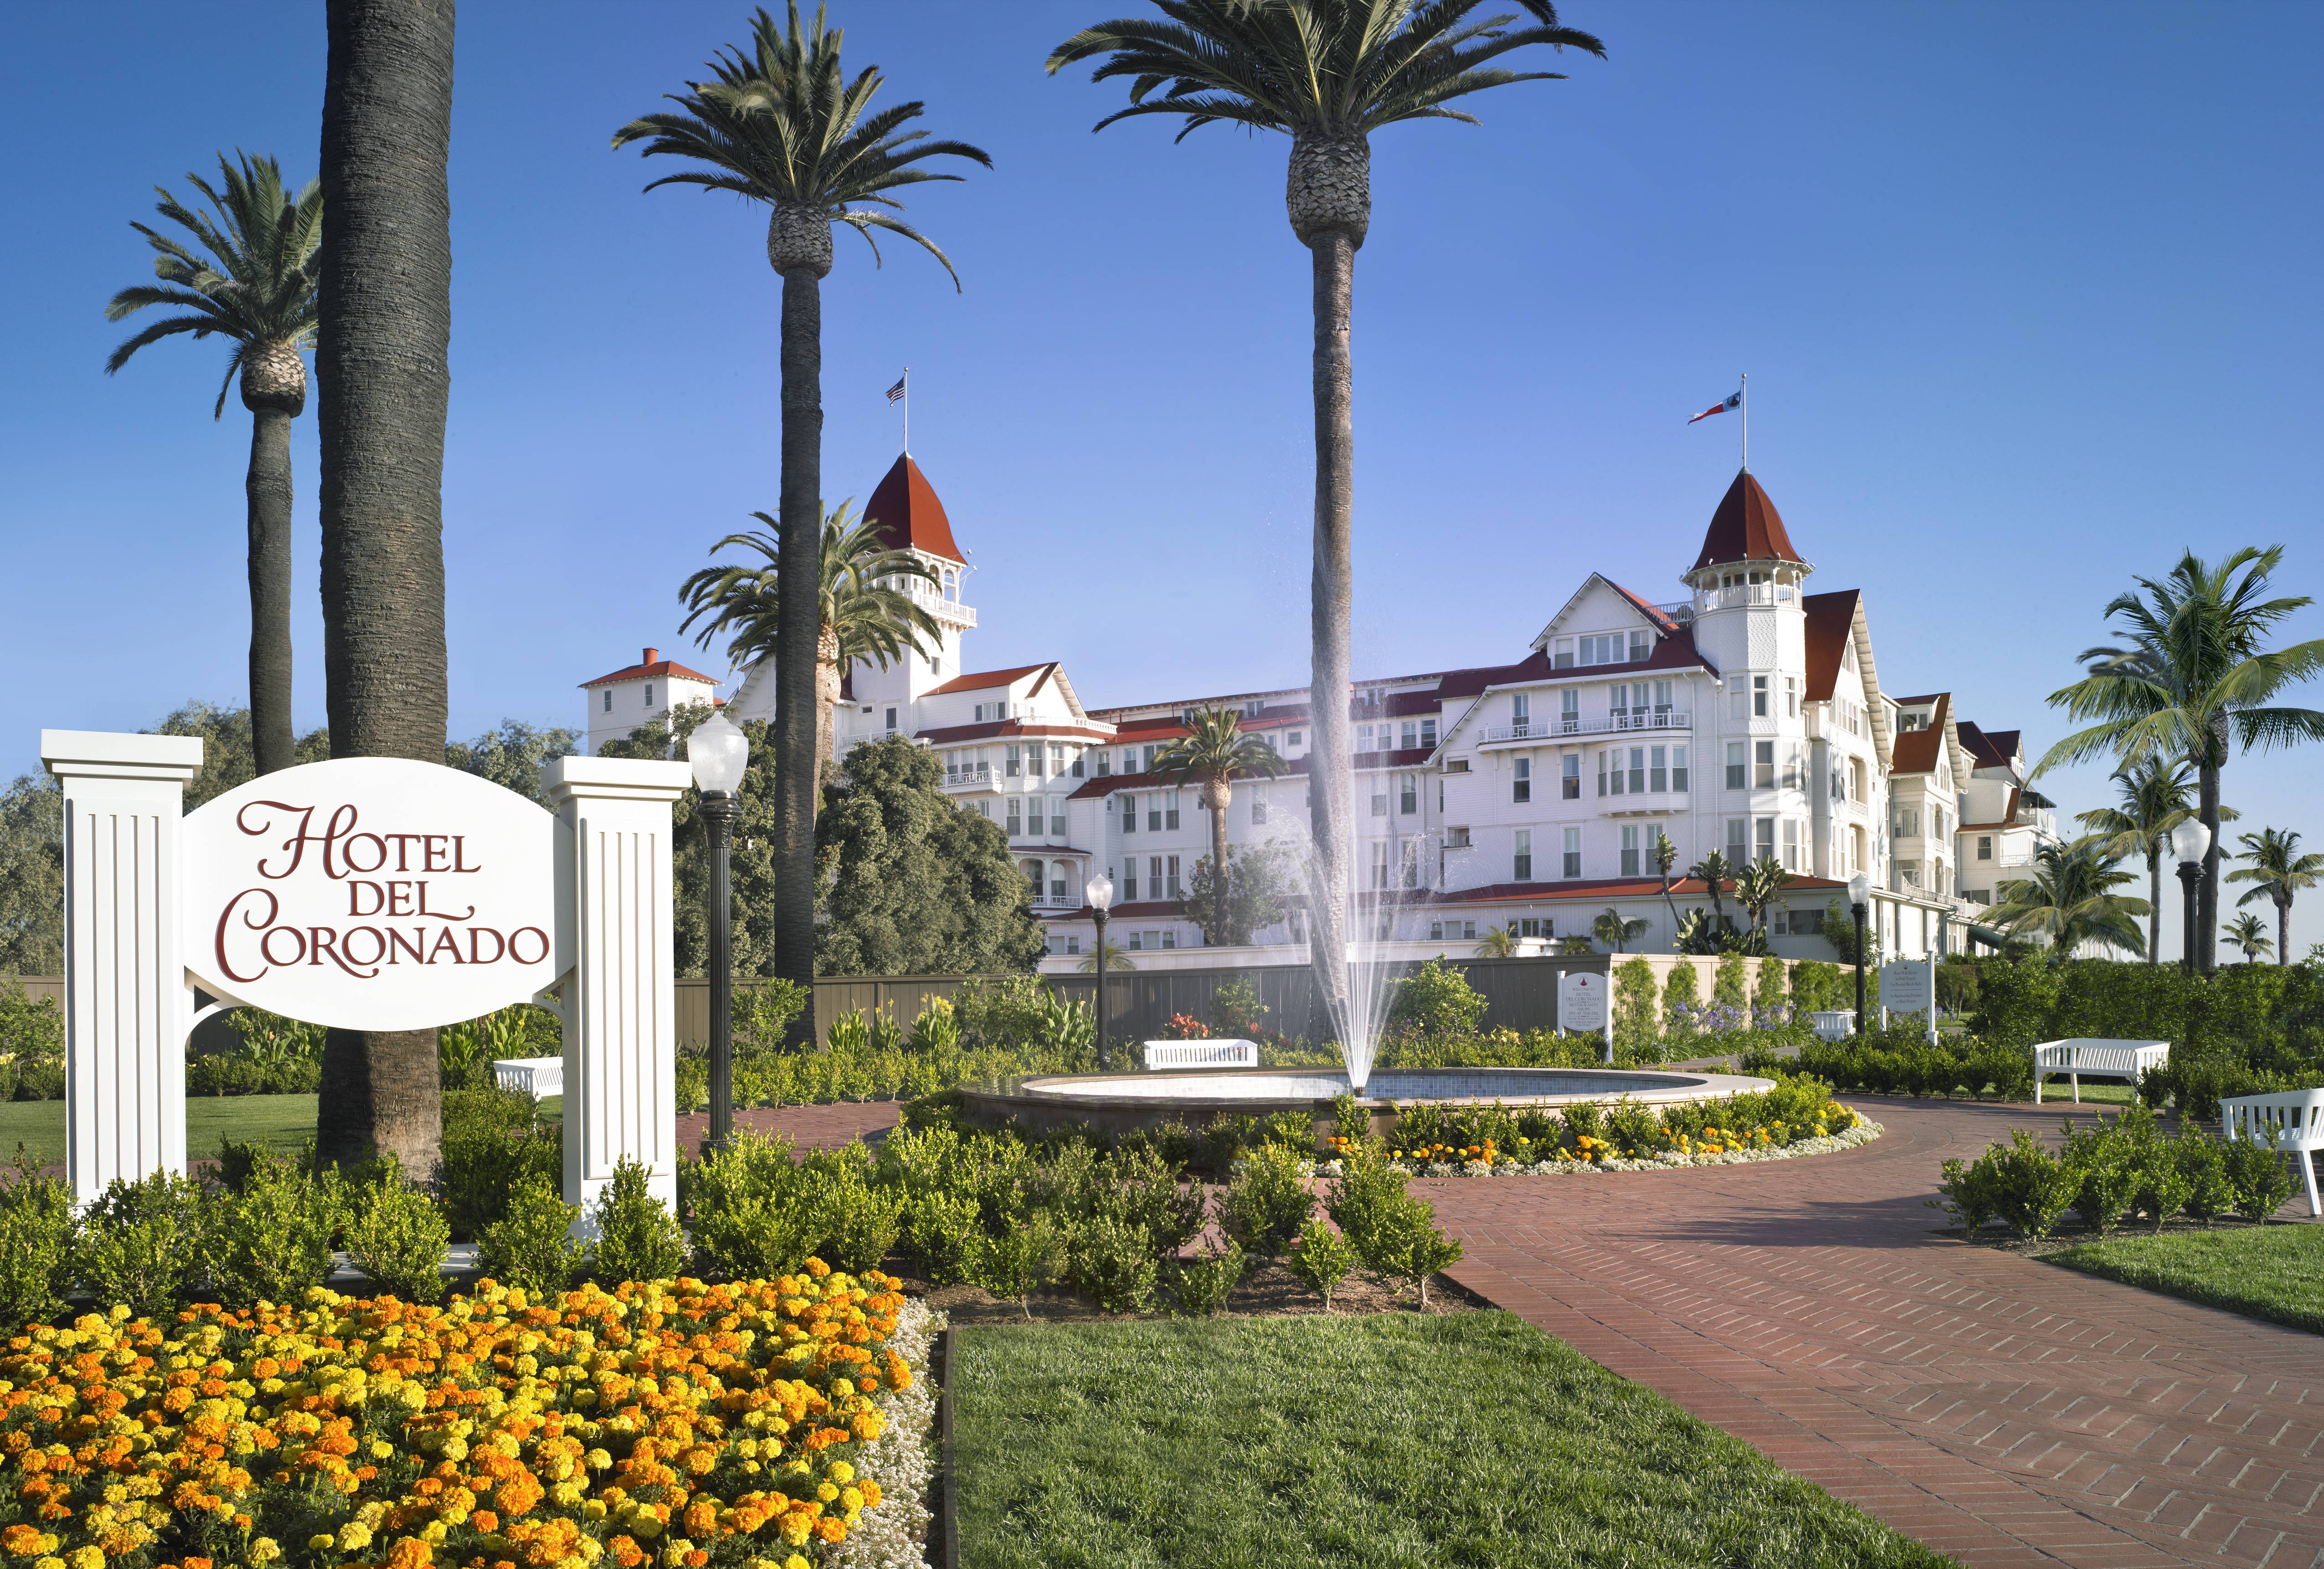 7 Reasons Why Hotel Del Coronado is an Essential SoCal Stay